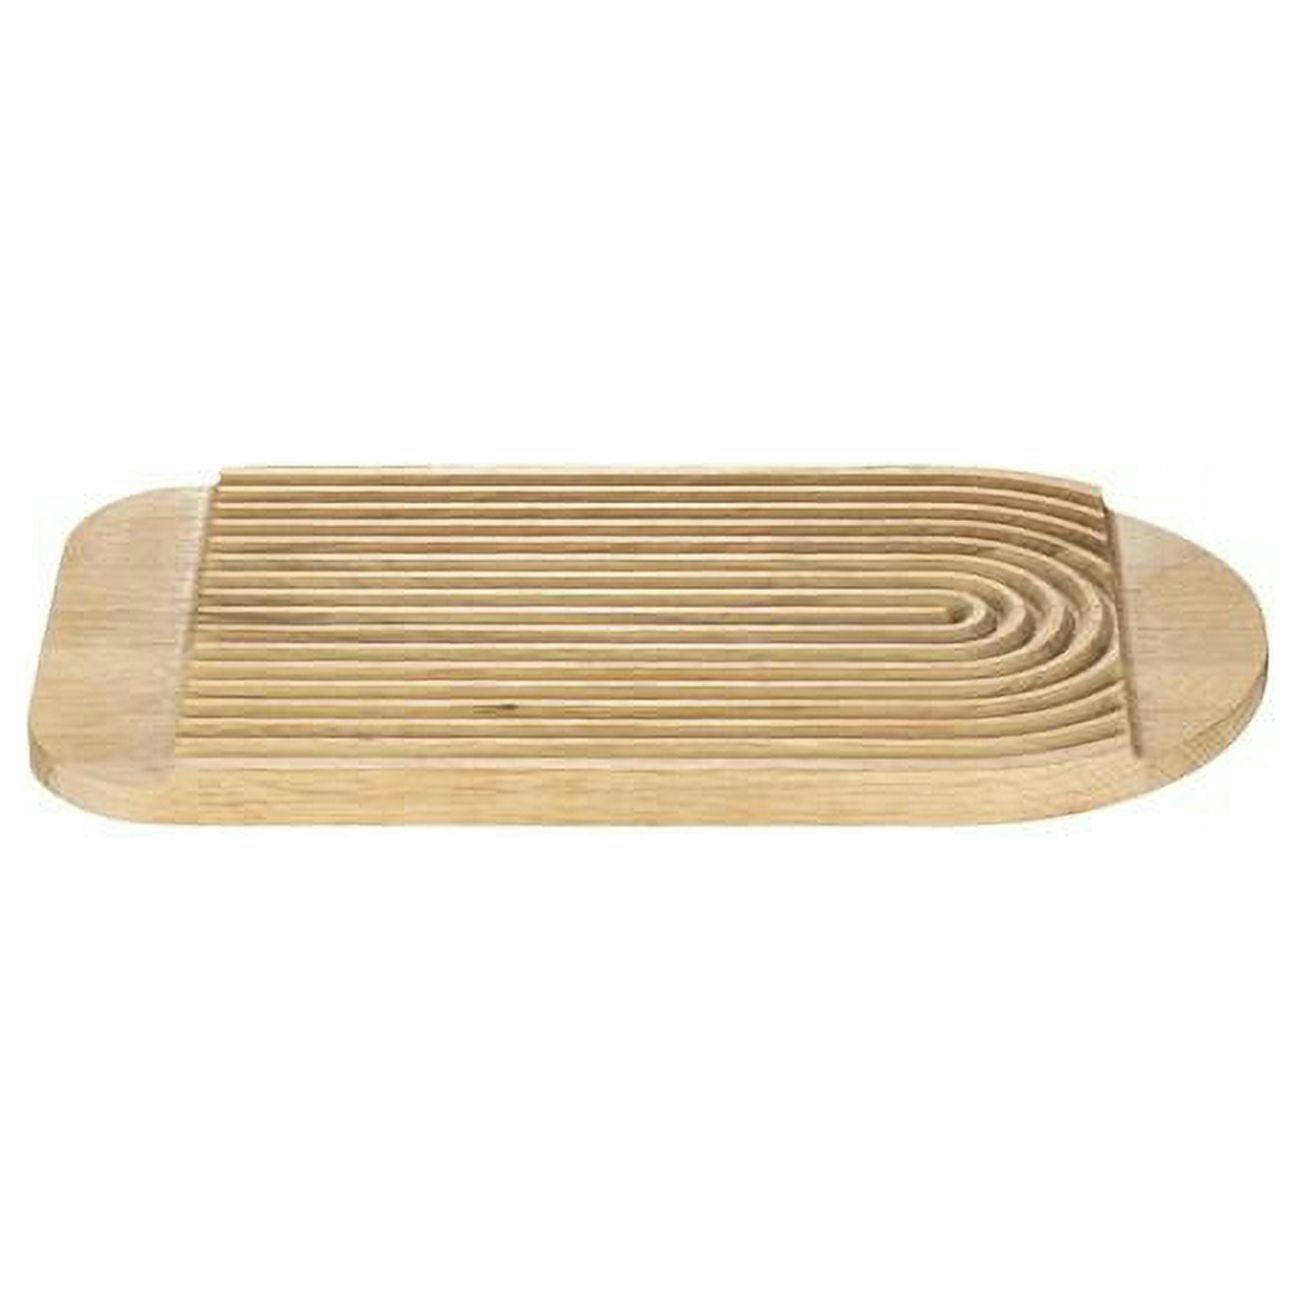 Zen Medium Oak Wood Cutting Board Tray